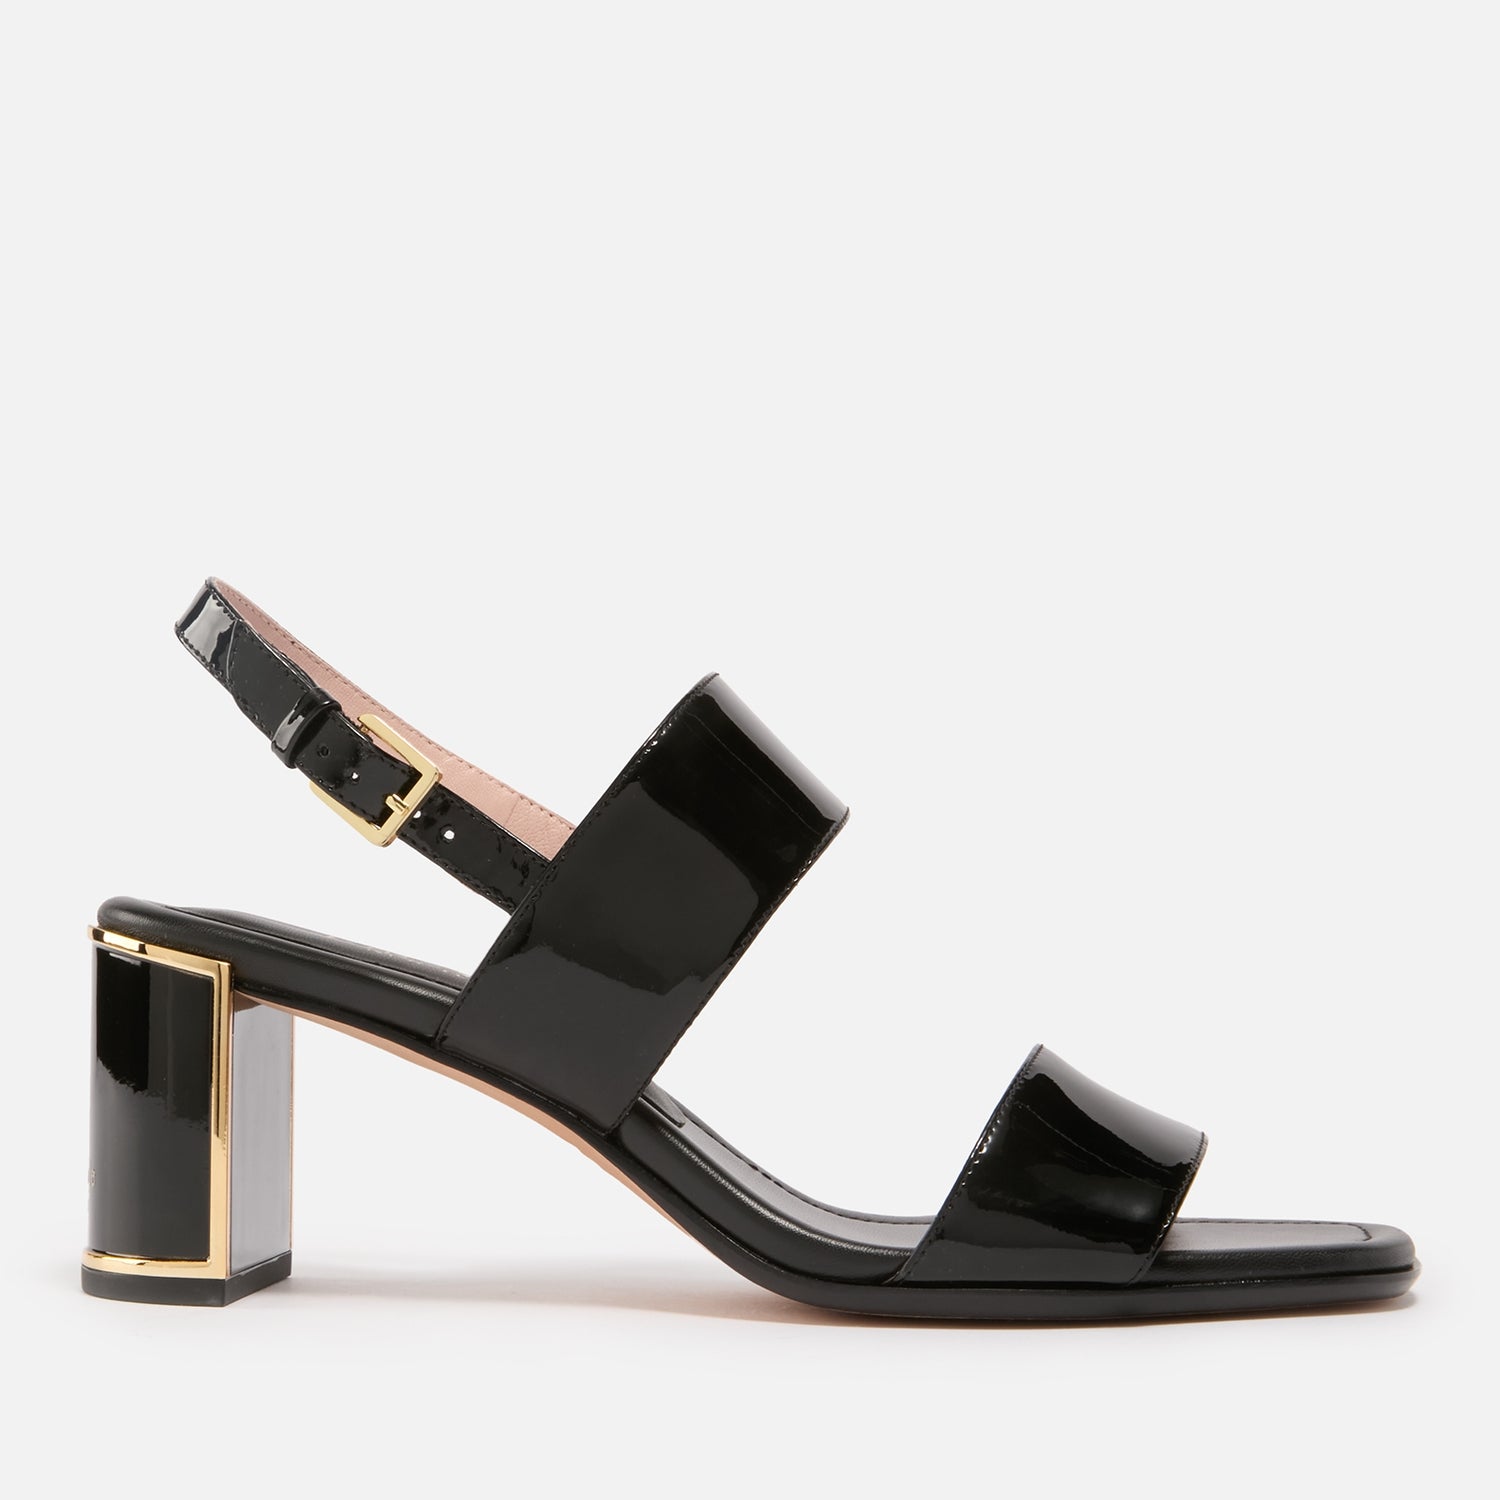 Kate Spade New York Women's Merritt Patent Leather Heeled Sandals - UK 8